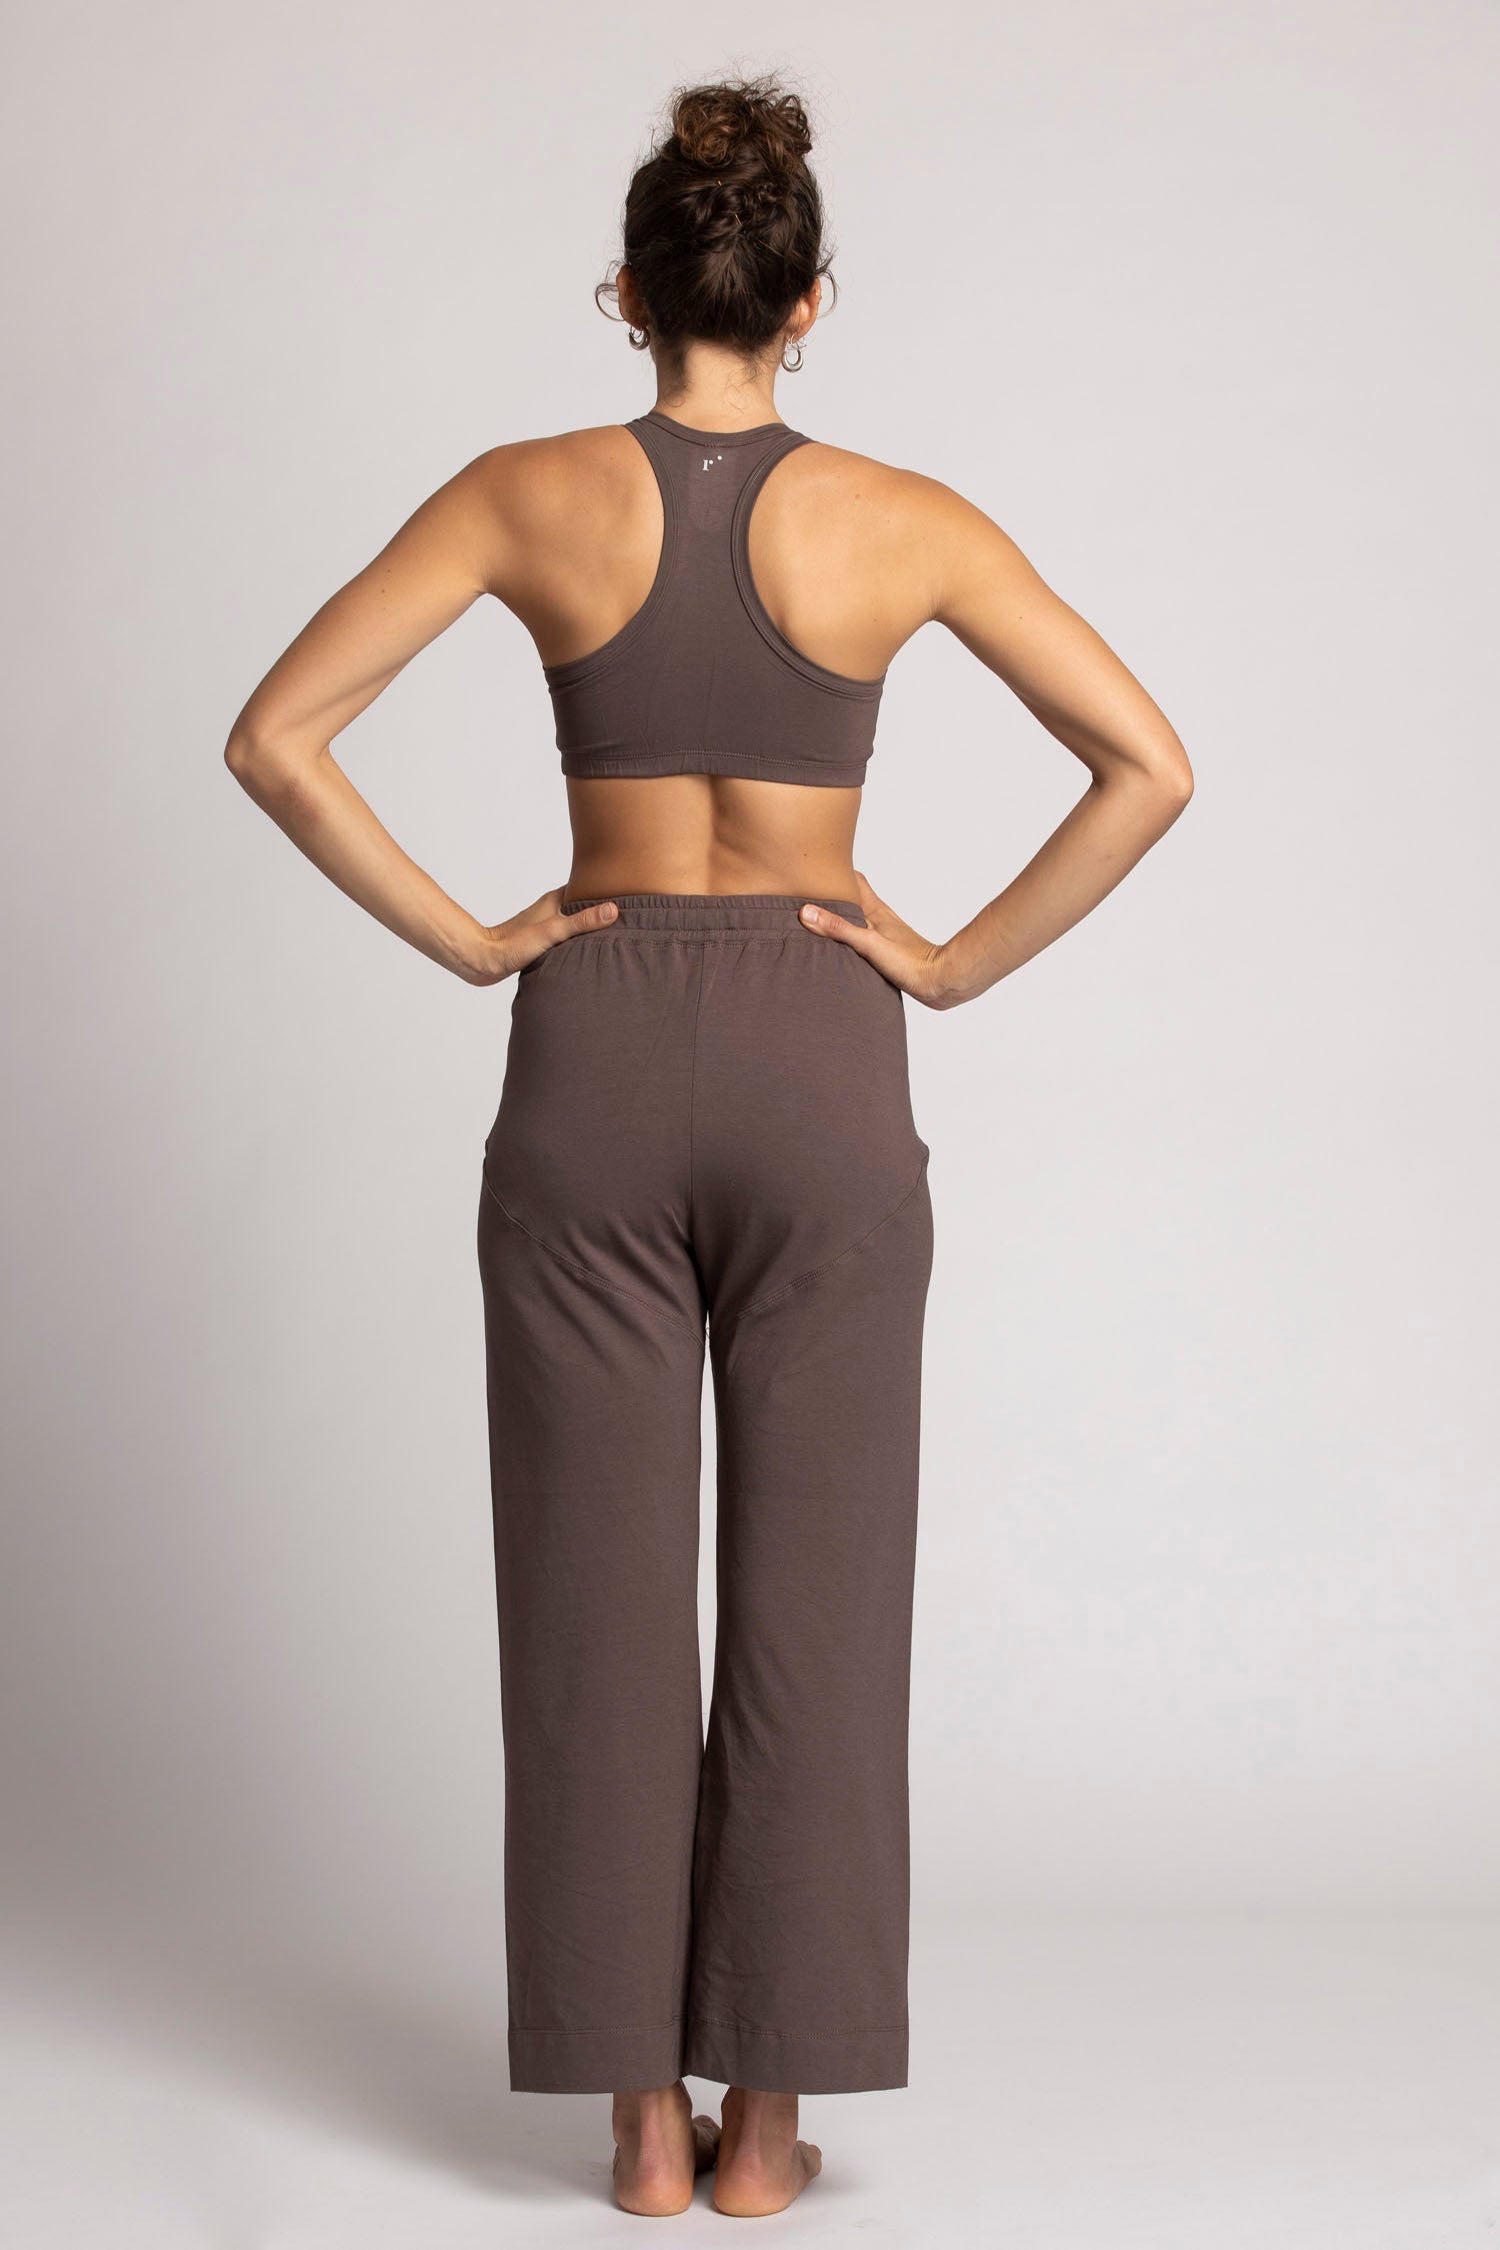 Leggings Yoga Pants for Women Brown Yoga Pants for Women Soft